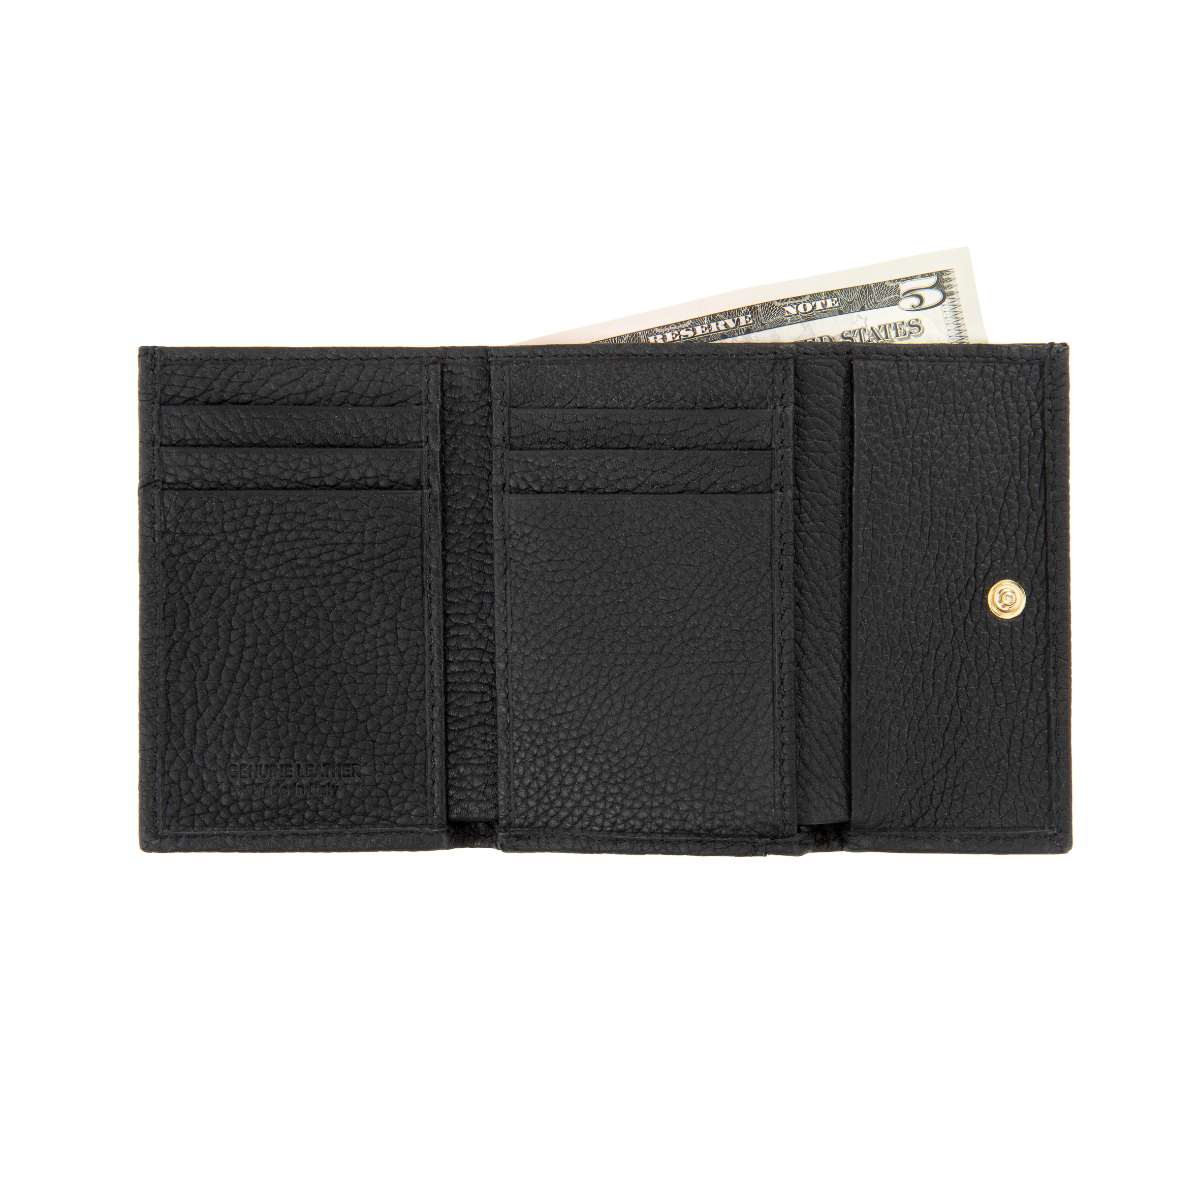 Black wallet